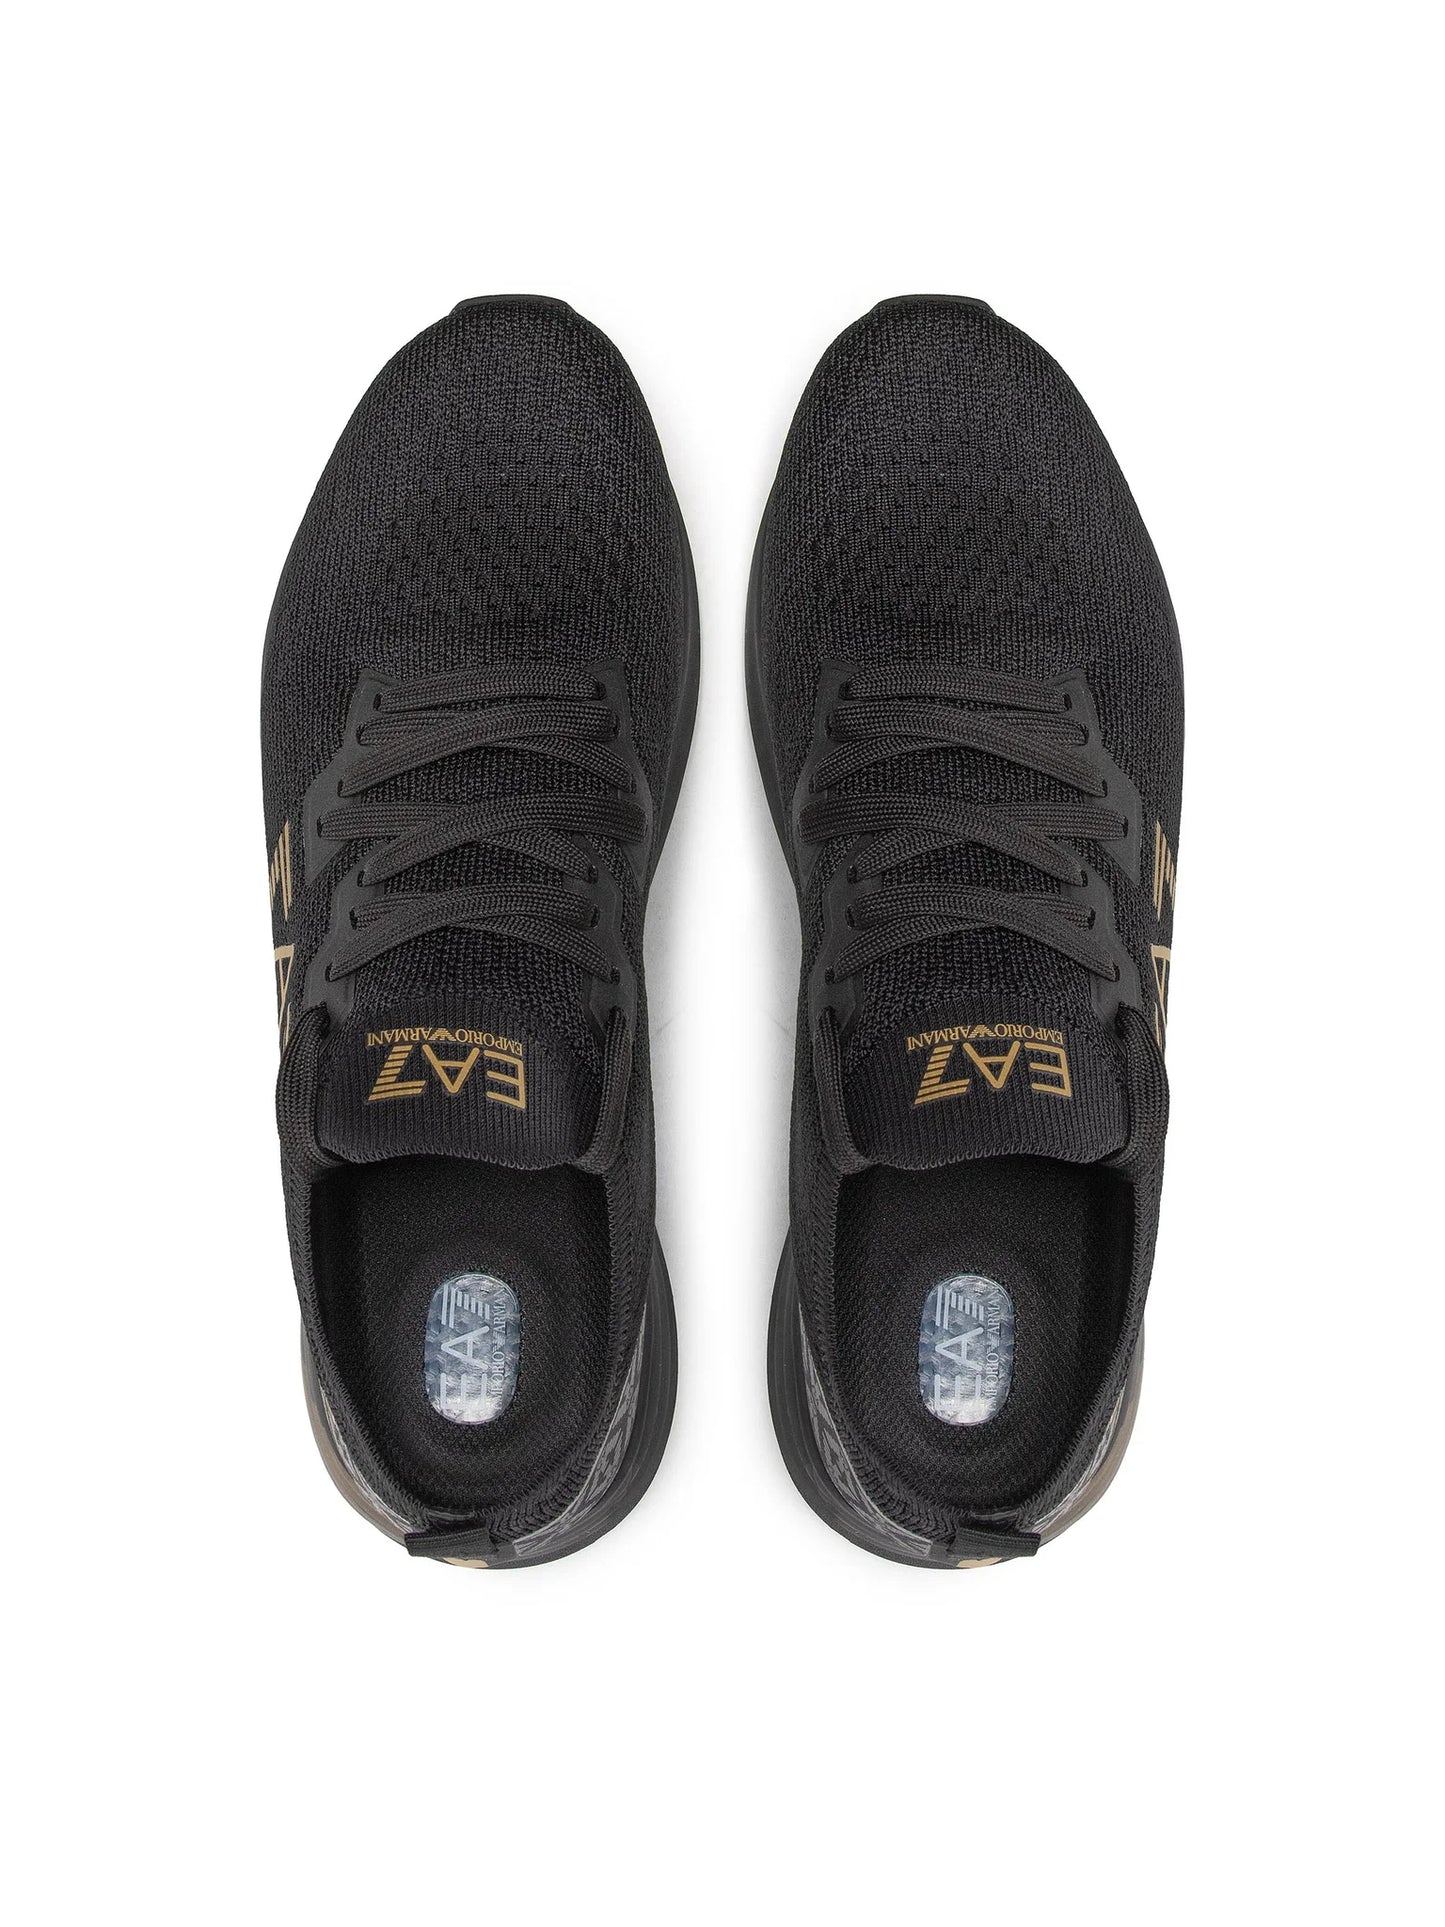 EA7 EMPORIO ARMANI Sneakers - Black/Gold